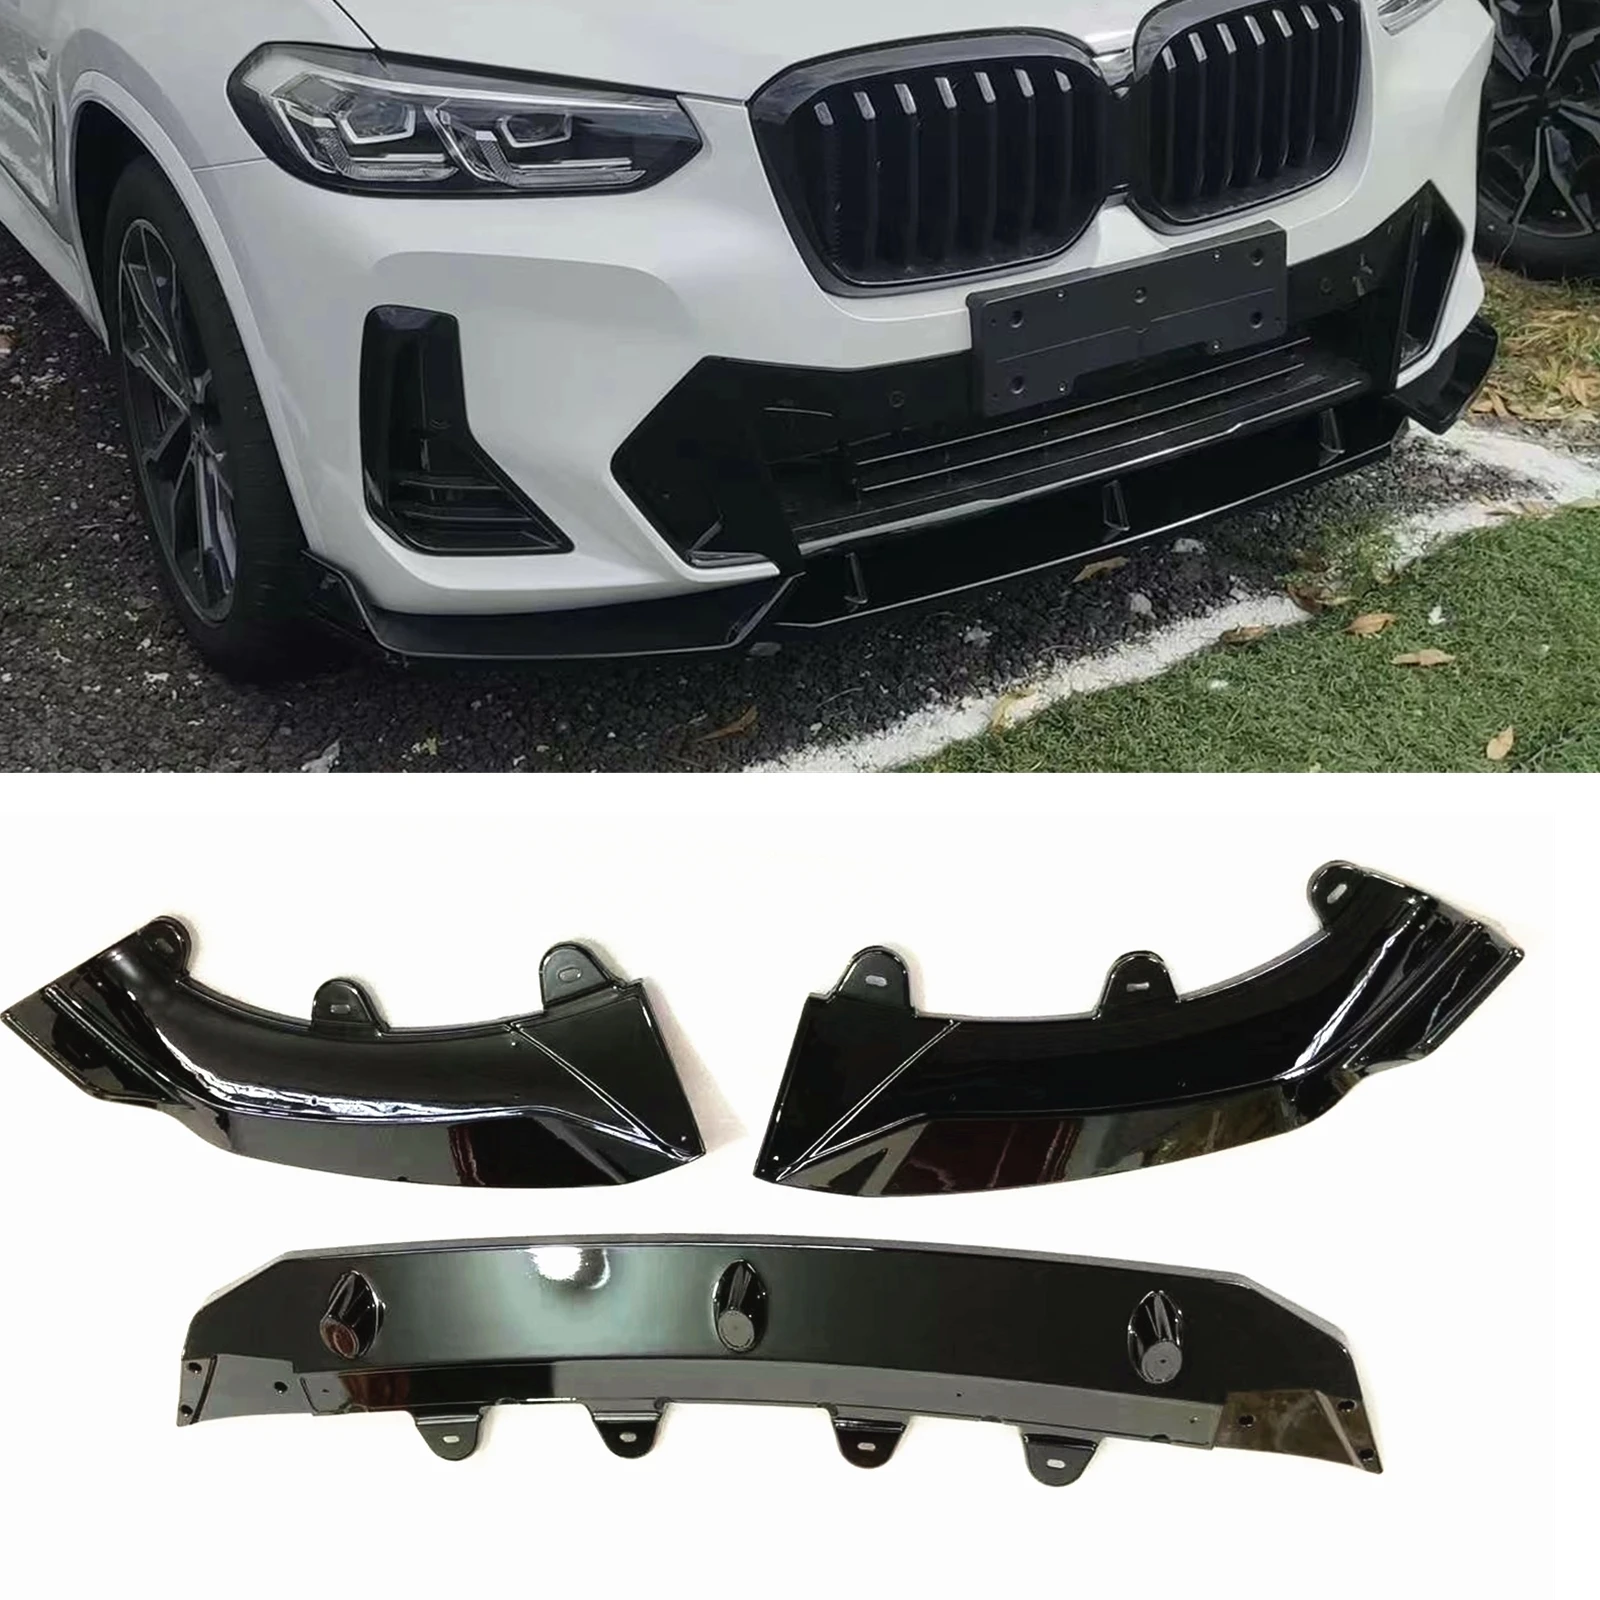 

Front Bumper Spoiler Lip For BMW X3 IX3 2021.7-2022 Gloss Black/Carbon Fiber Look Car Lower Body Kit Splitter Guard Plate Blade